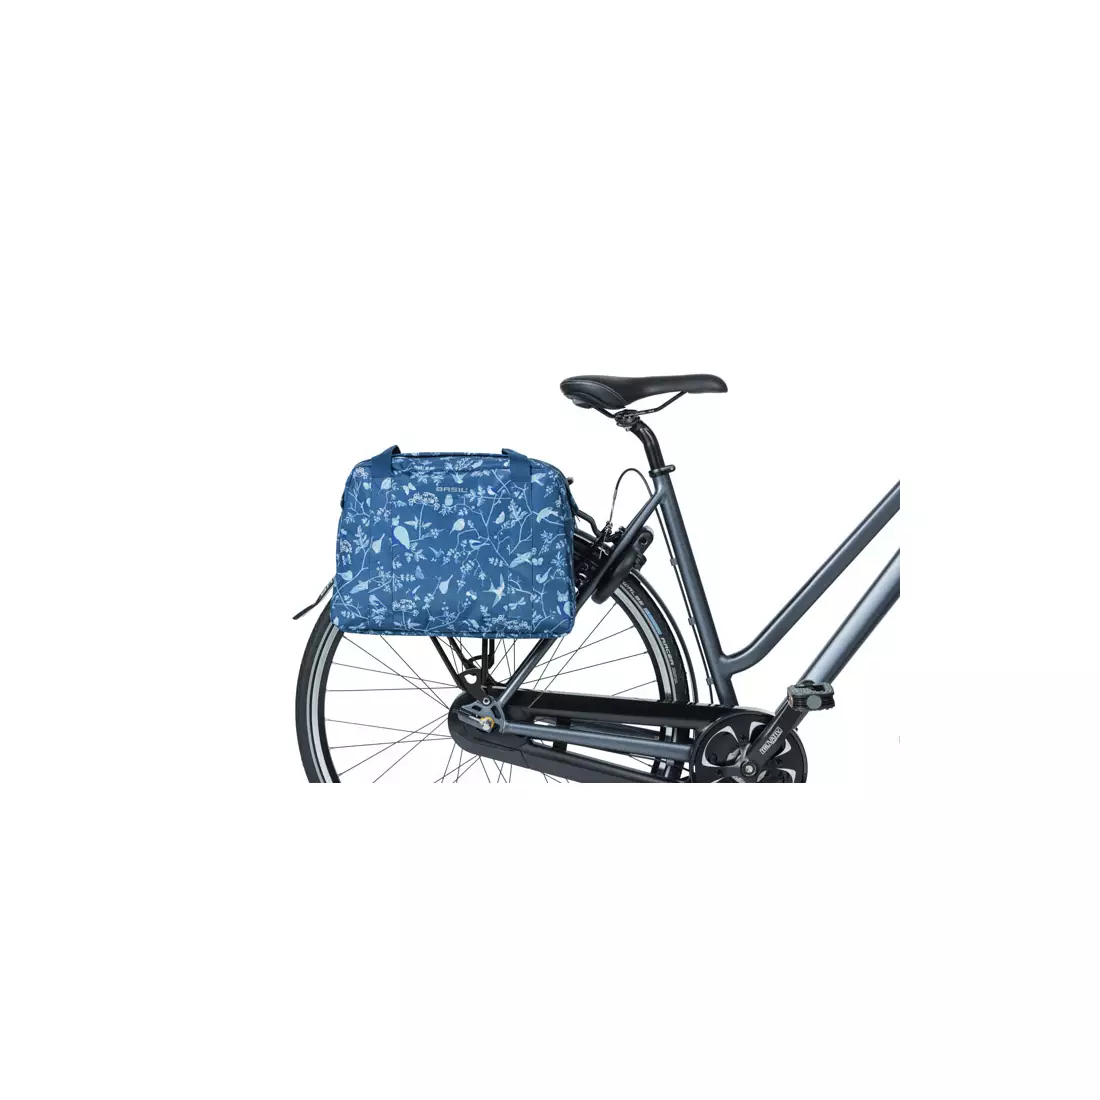 BASIL zadný bicyklový kufrík WANDERLUST CARRY ALL BAG 18L indigo blue 18090